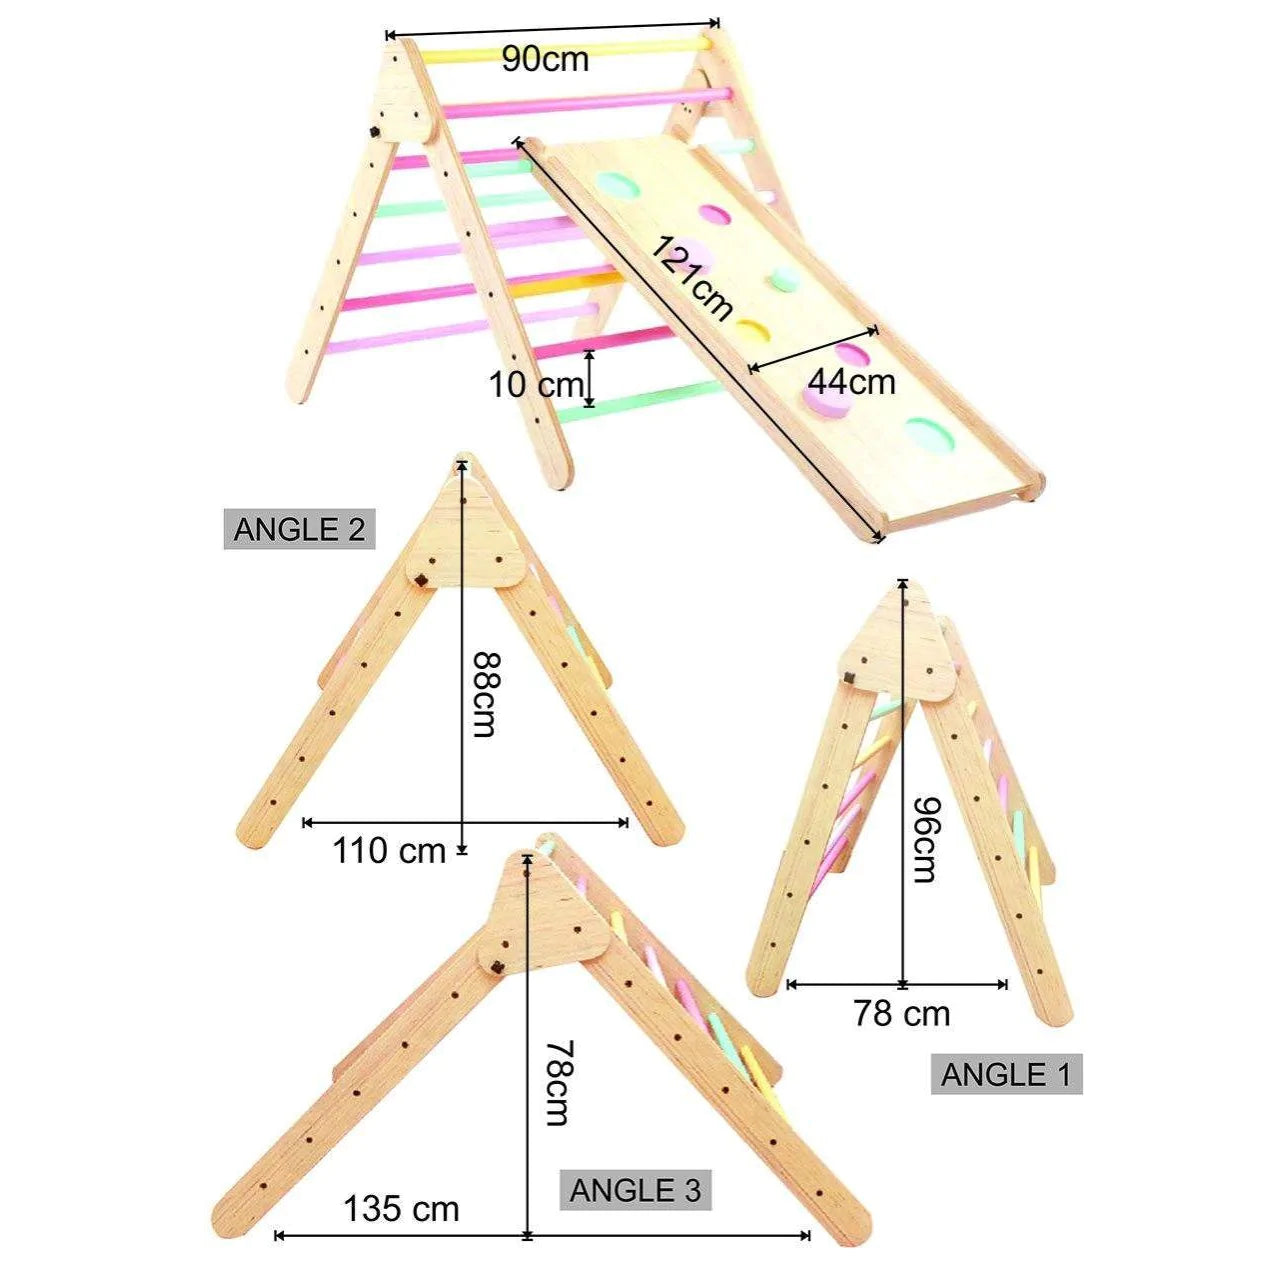 Buy Ariro Semi Colored Pikler Triangle Play - SkilloToys.com